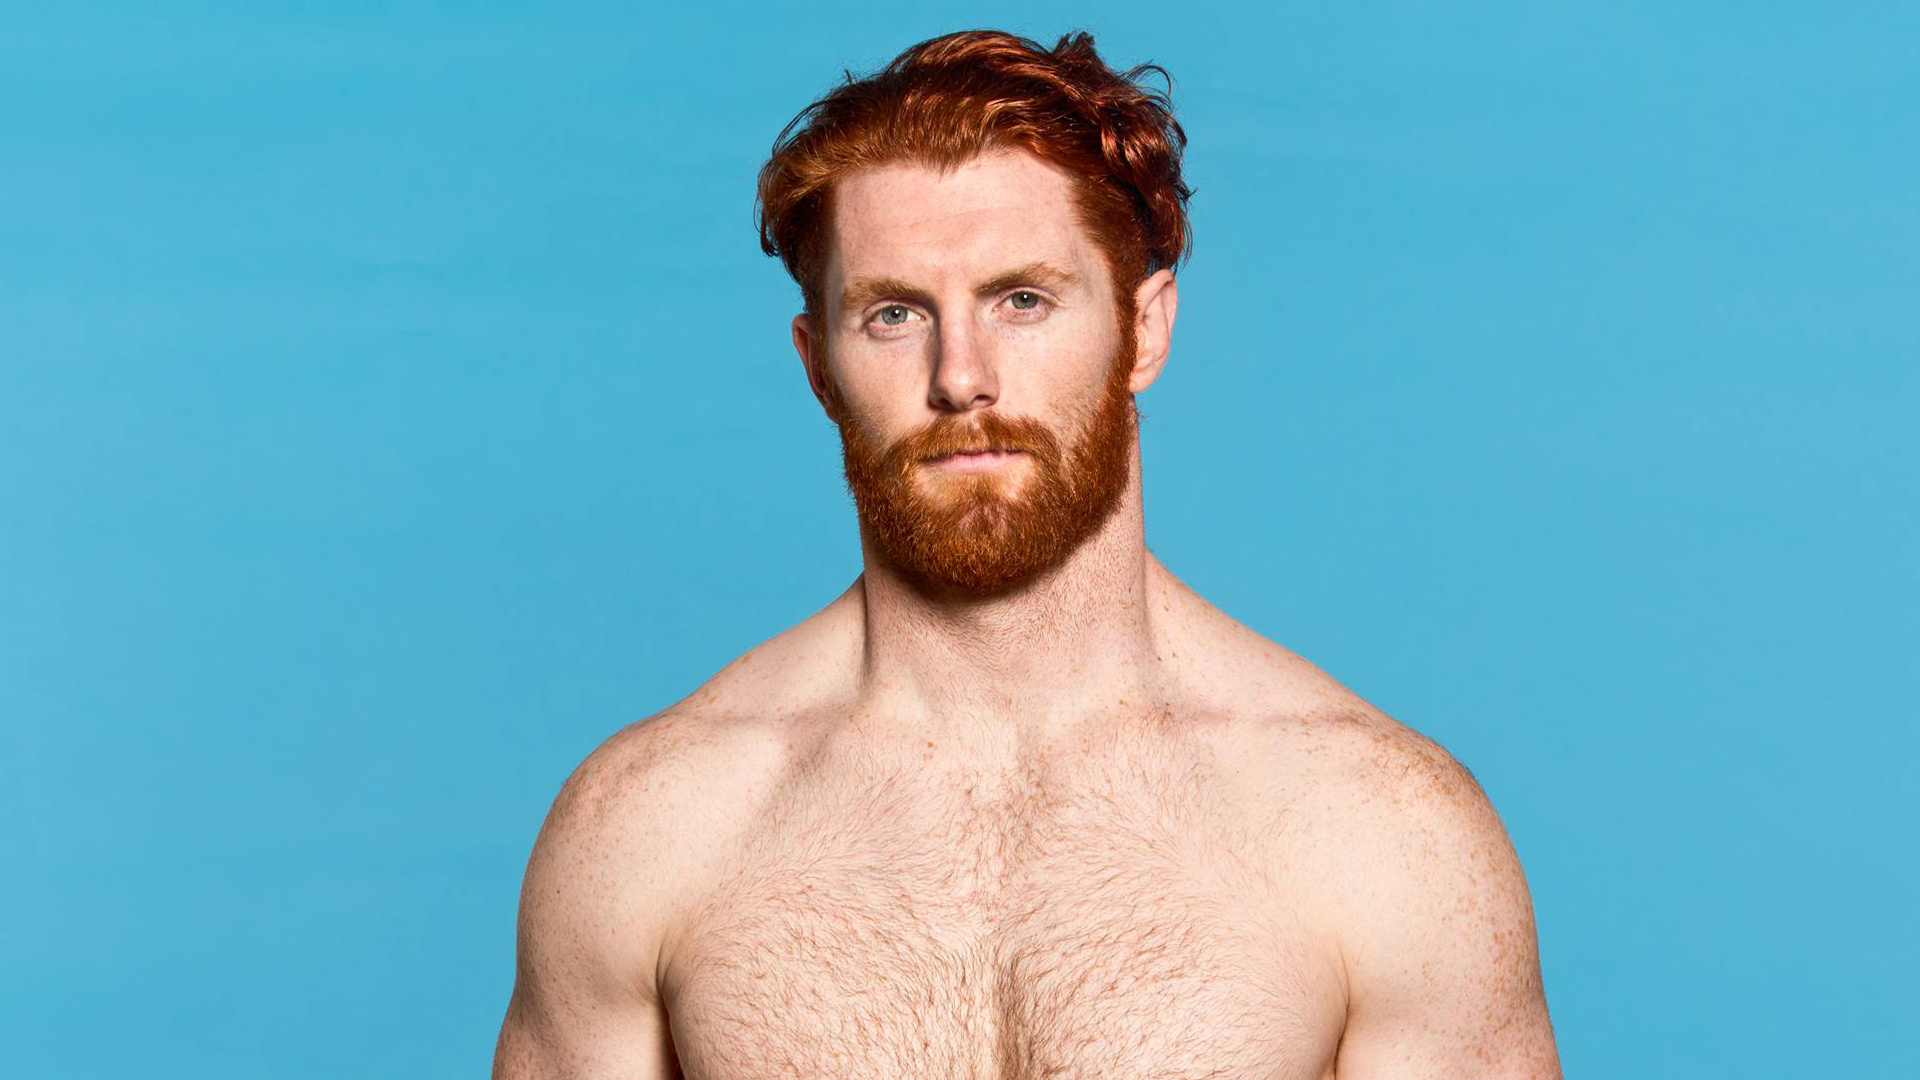 Hairy redhead man shower